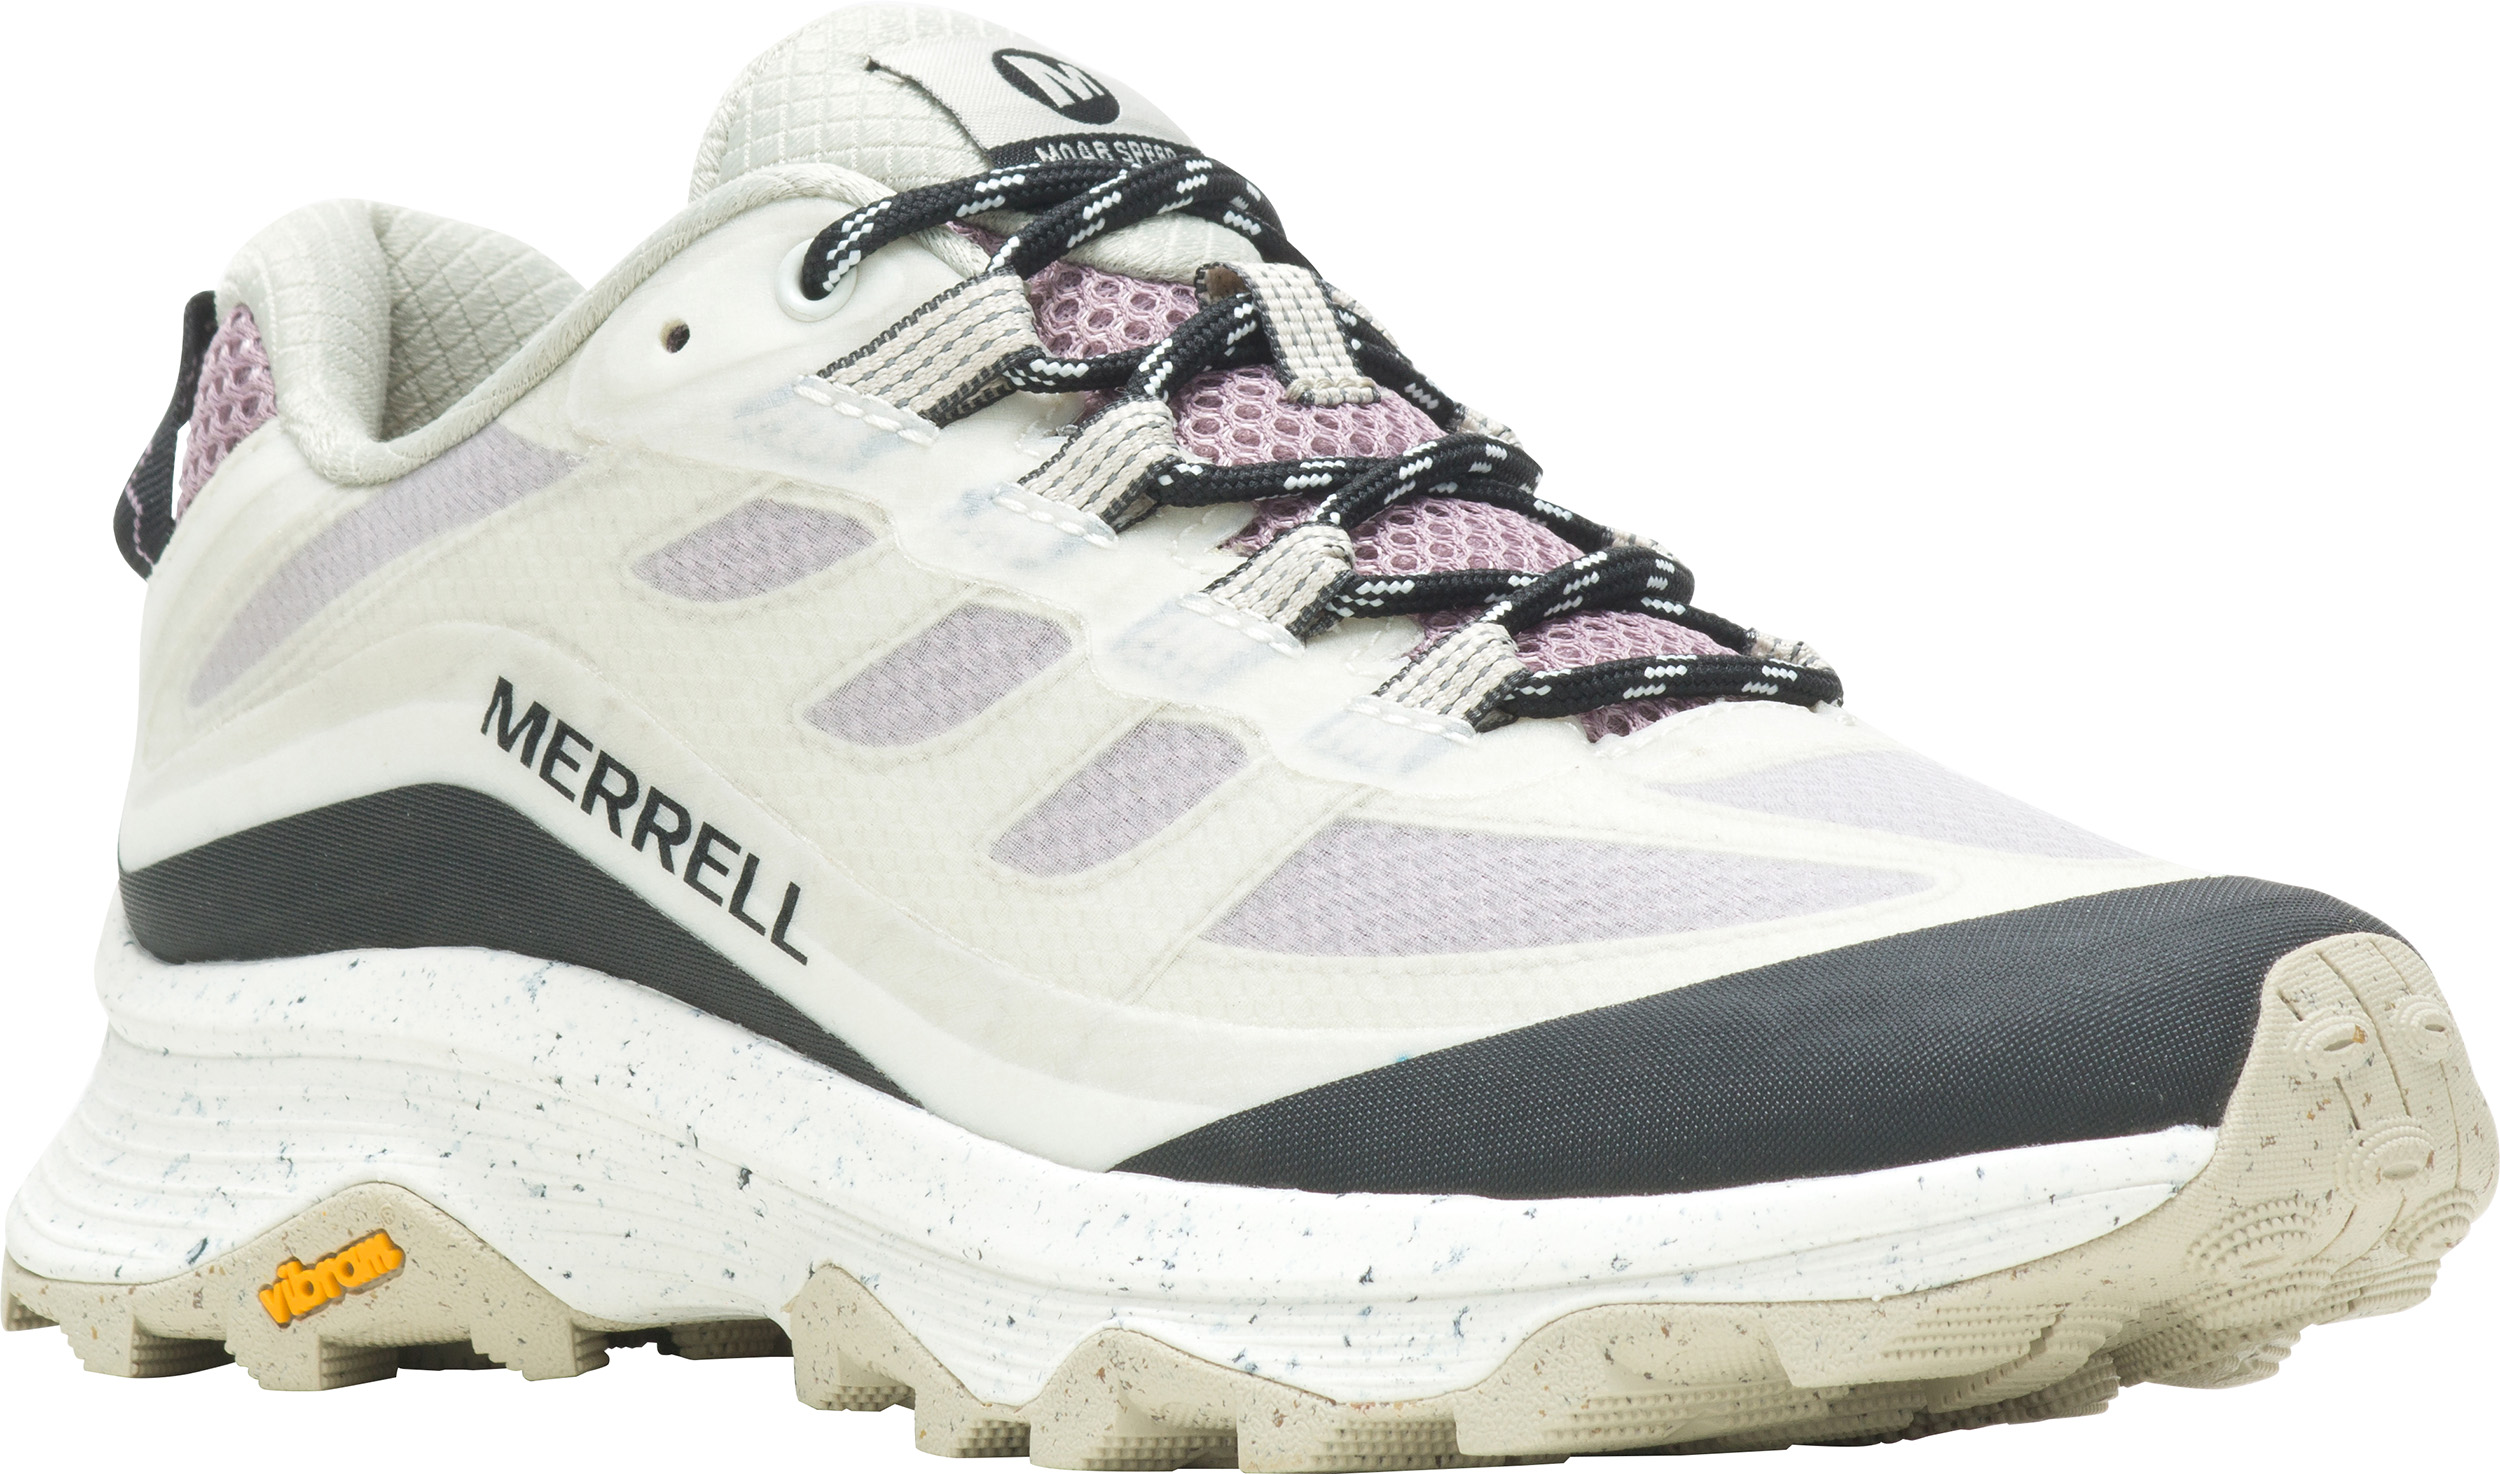 Merrell Moab Speed Light Trail Shoes - Women's